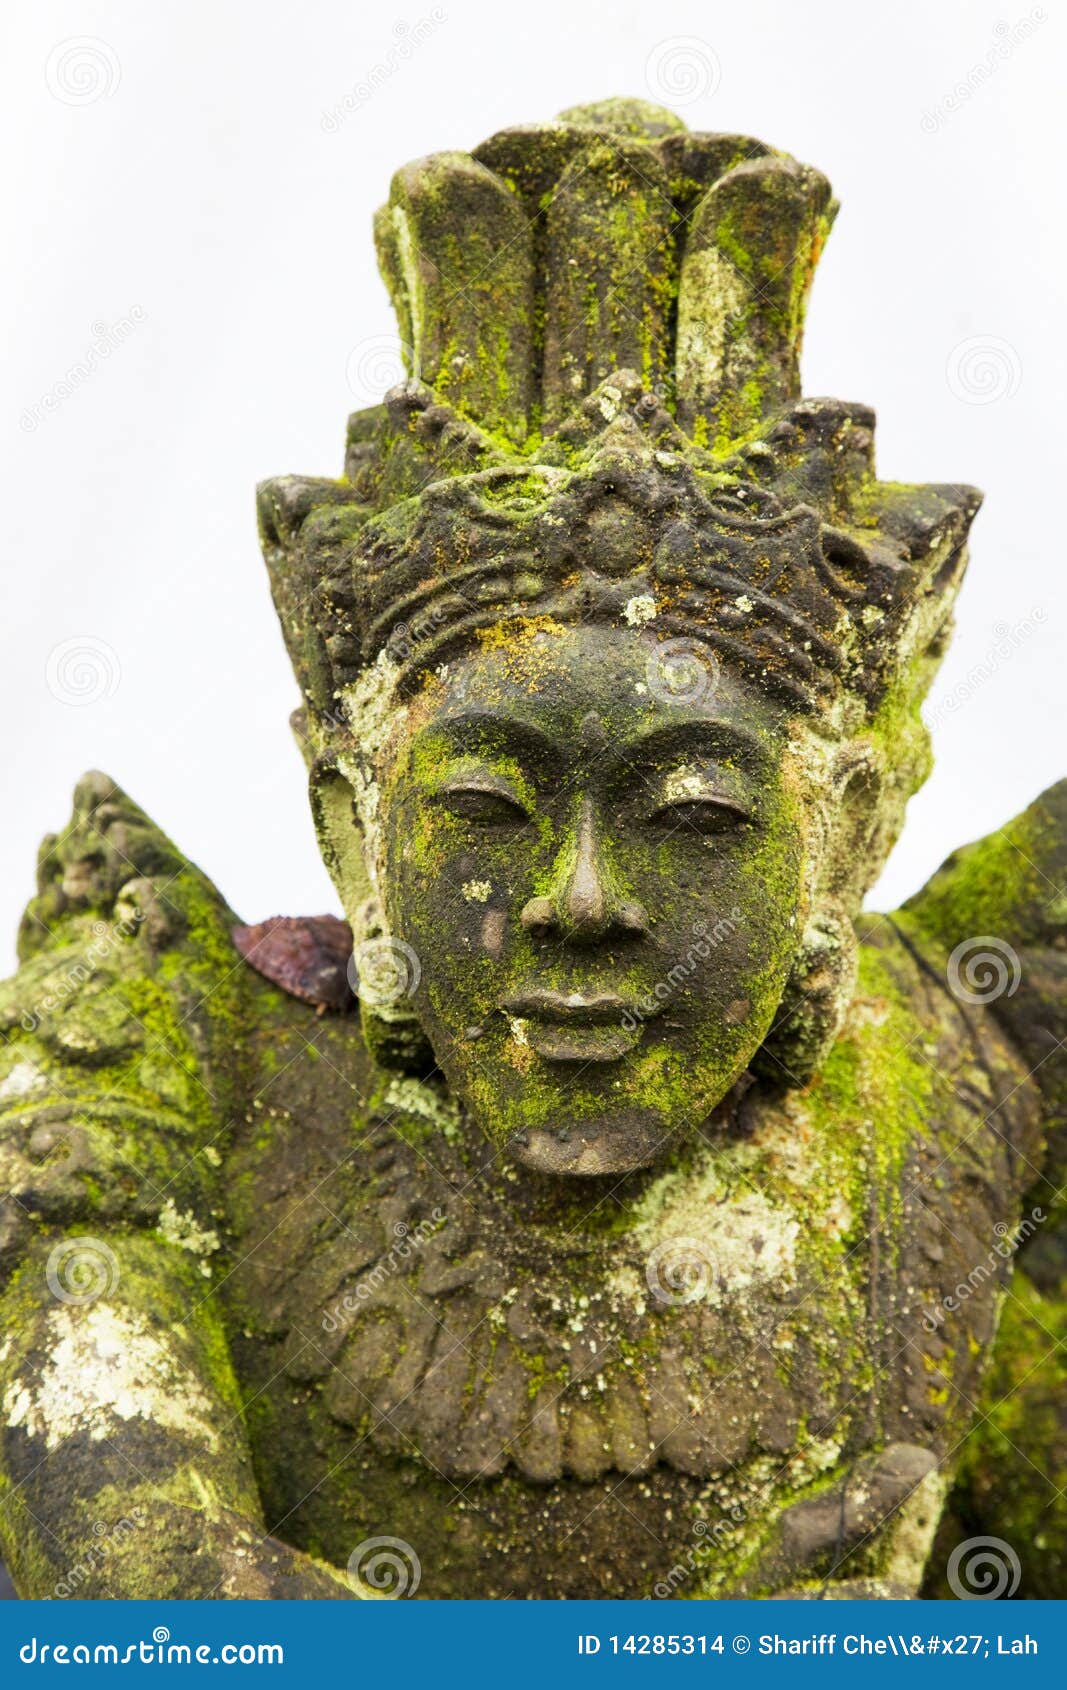 mossy stone statue at pura ulun danu batur, bali